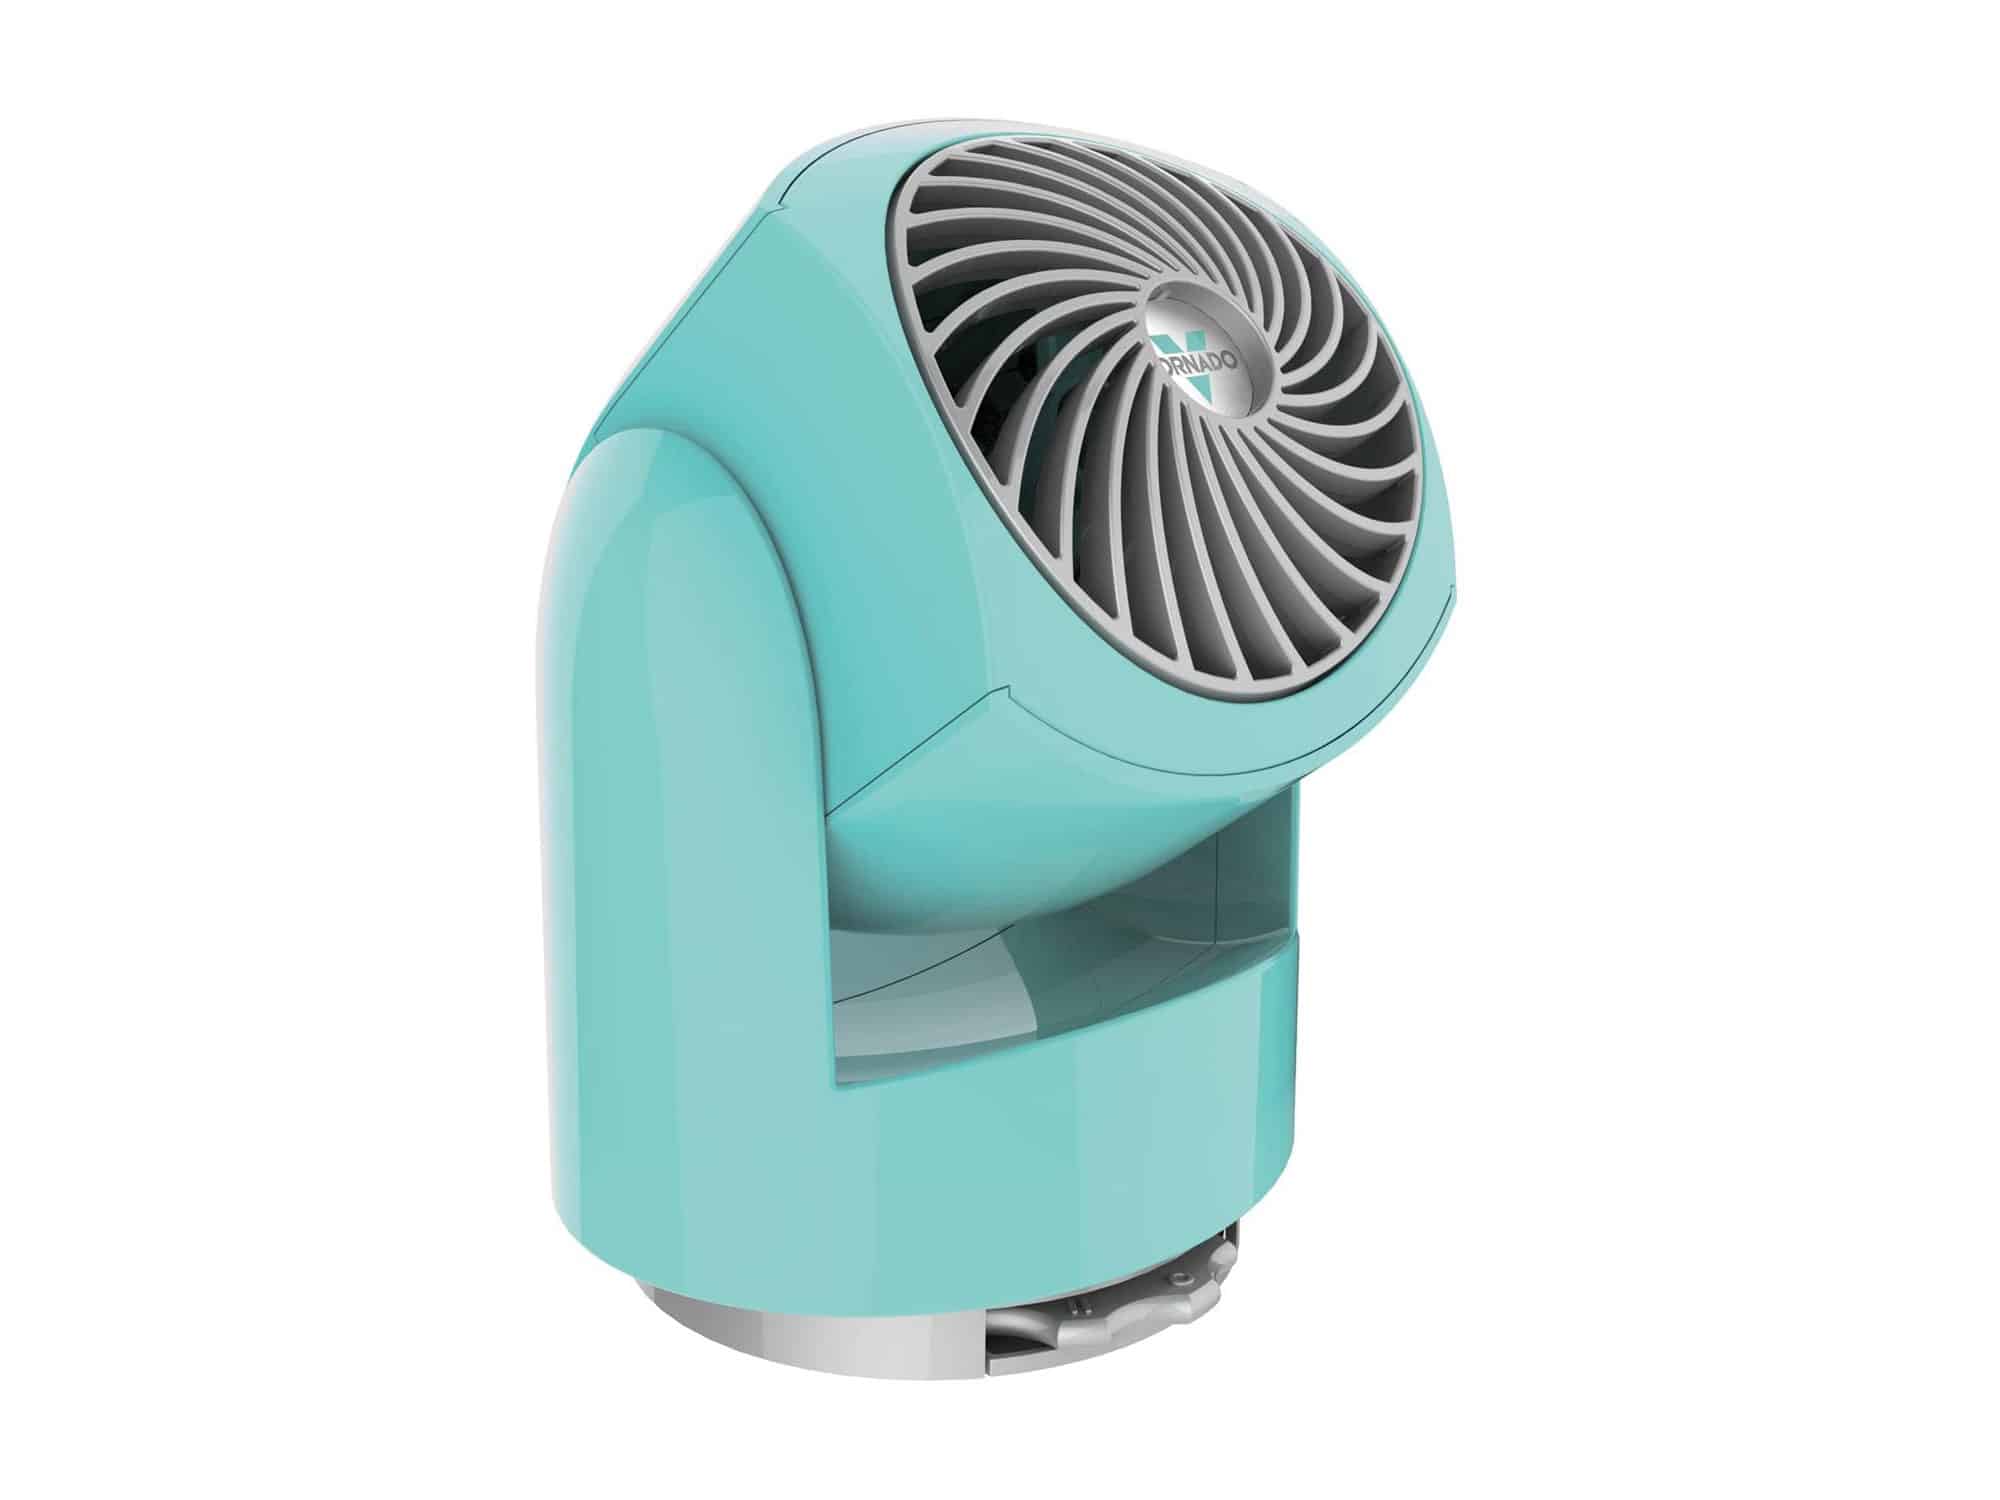 Vornado Flippi V6 Personal Air Circulator Fan, Bliss Blue Sleek design and seven colors